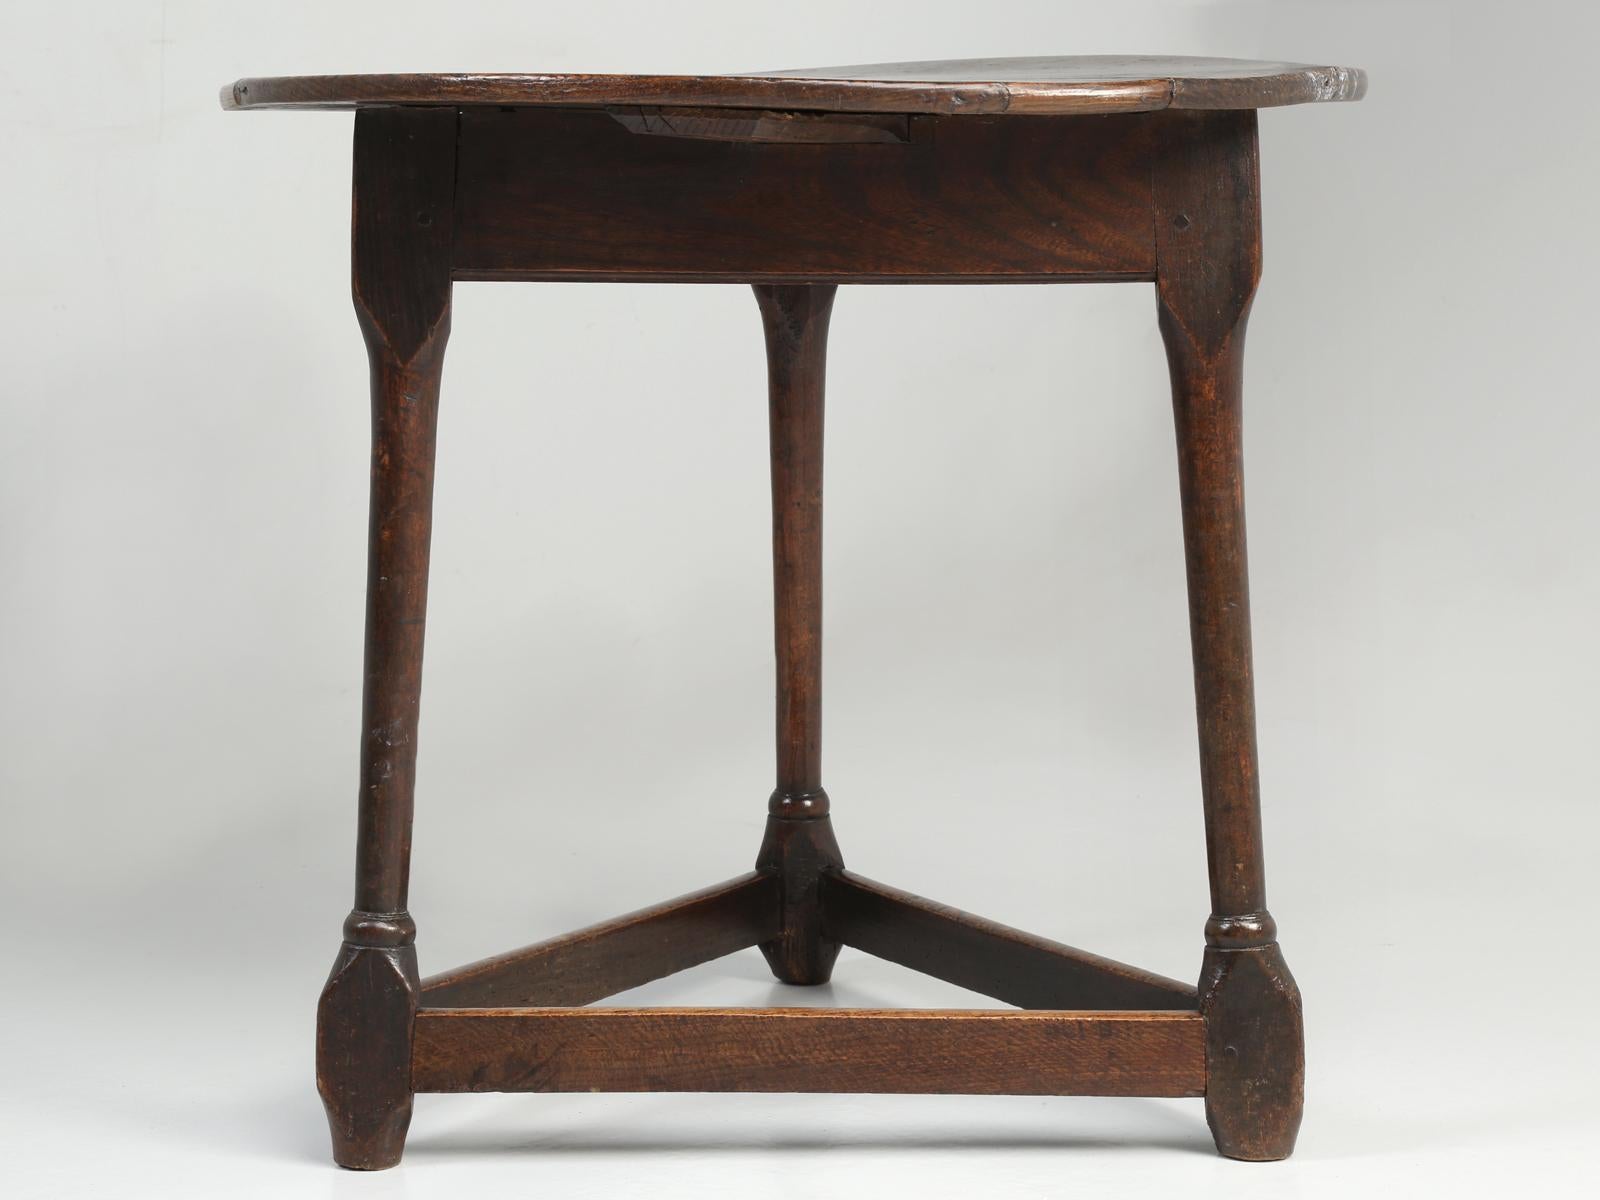 Antique English Cricket Table with a Great Original Patina, circa 1800s 3